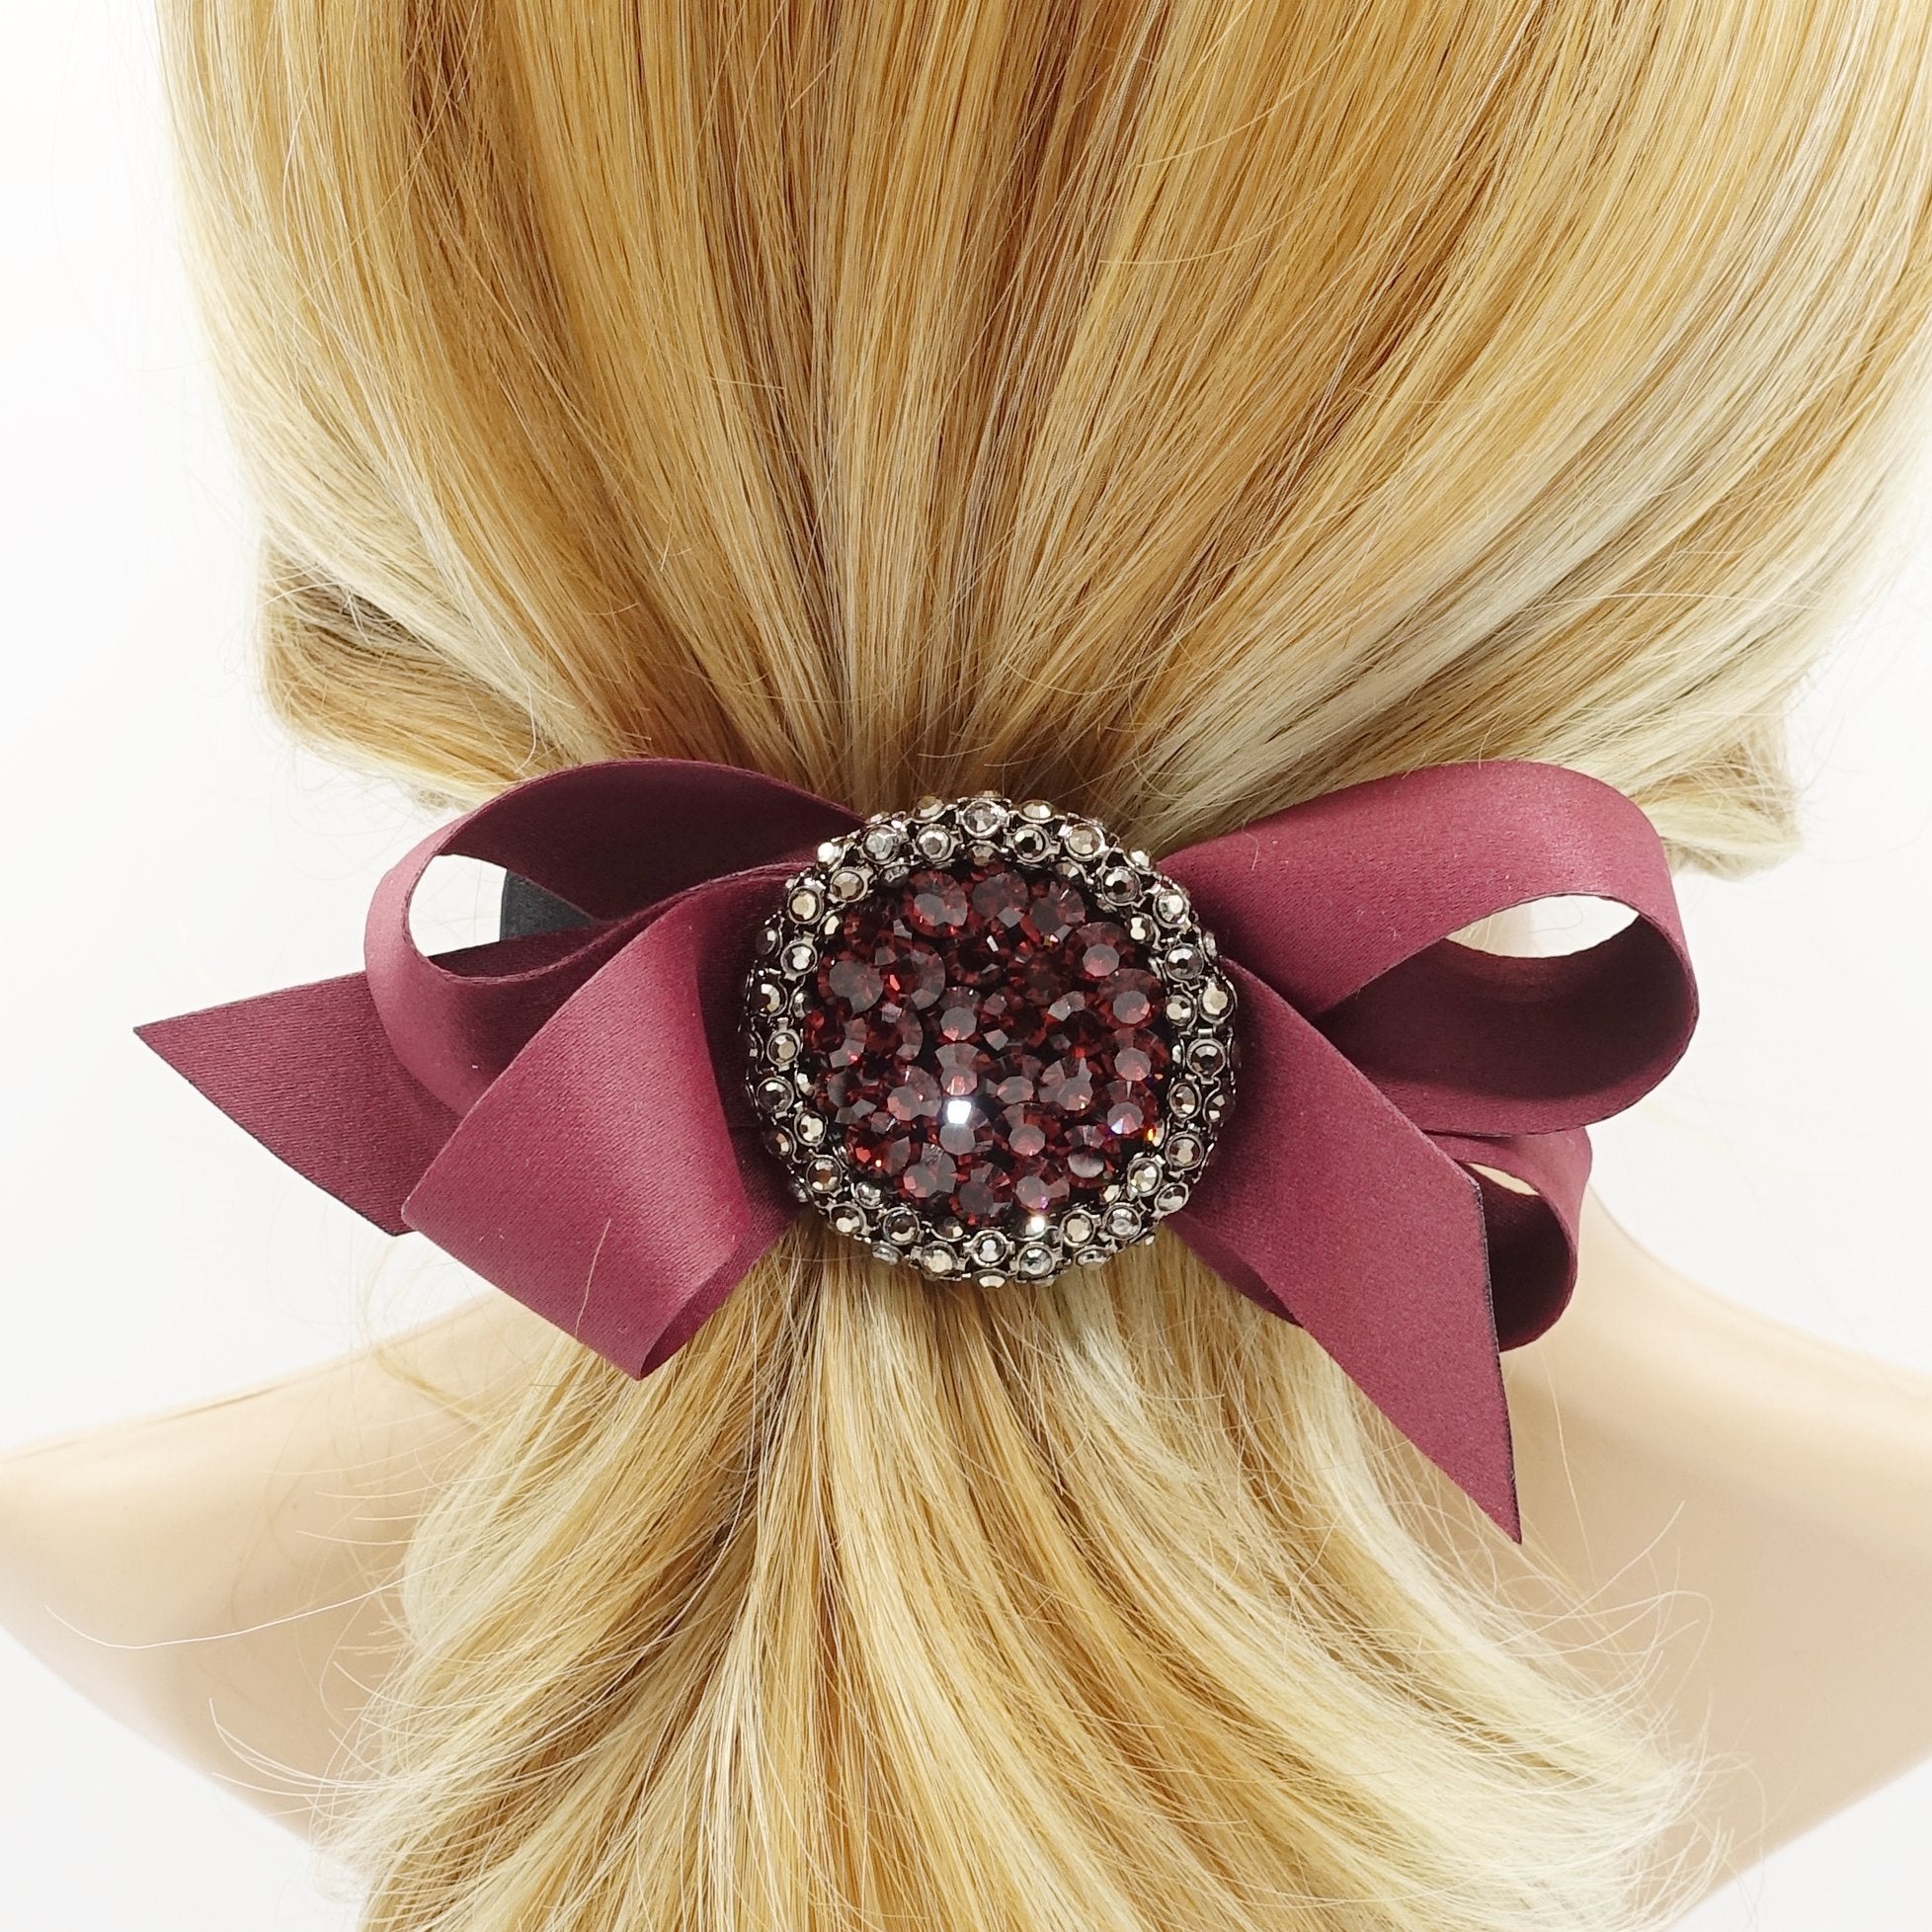 veryshine.com claw/banana/barrette Ruby color jewel buckle bow french barrette rhinestone embellished hair bow women hair accessory